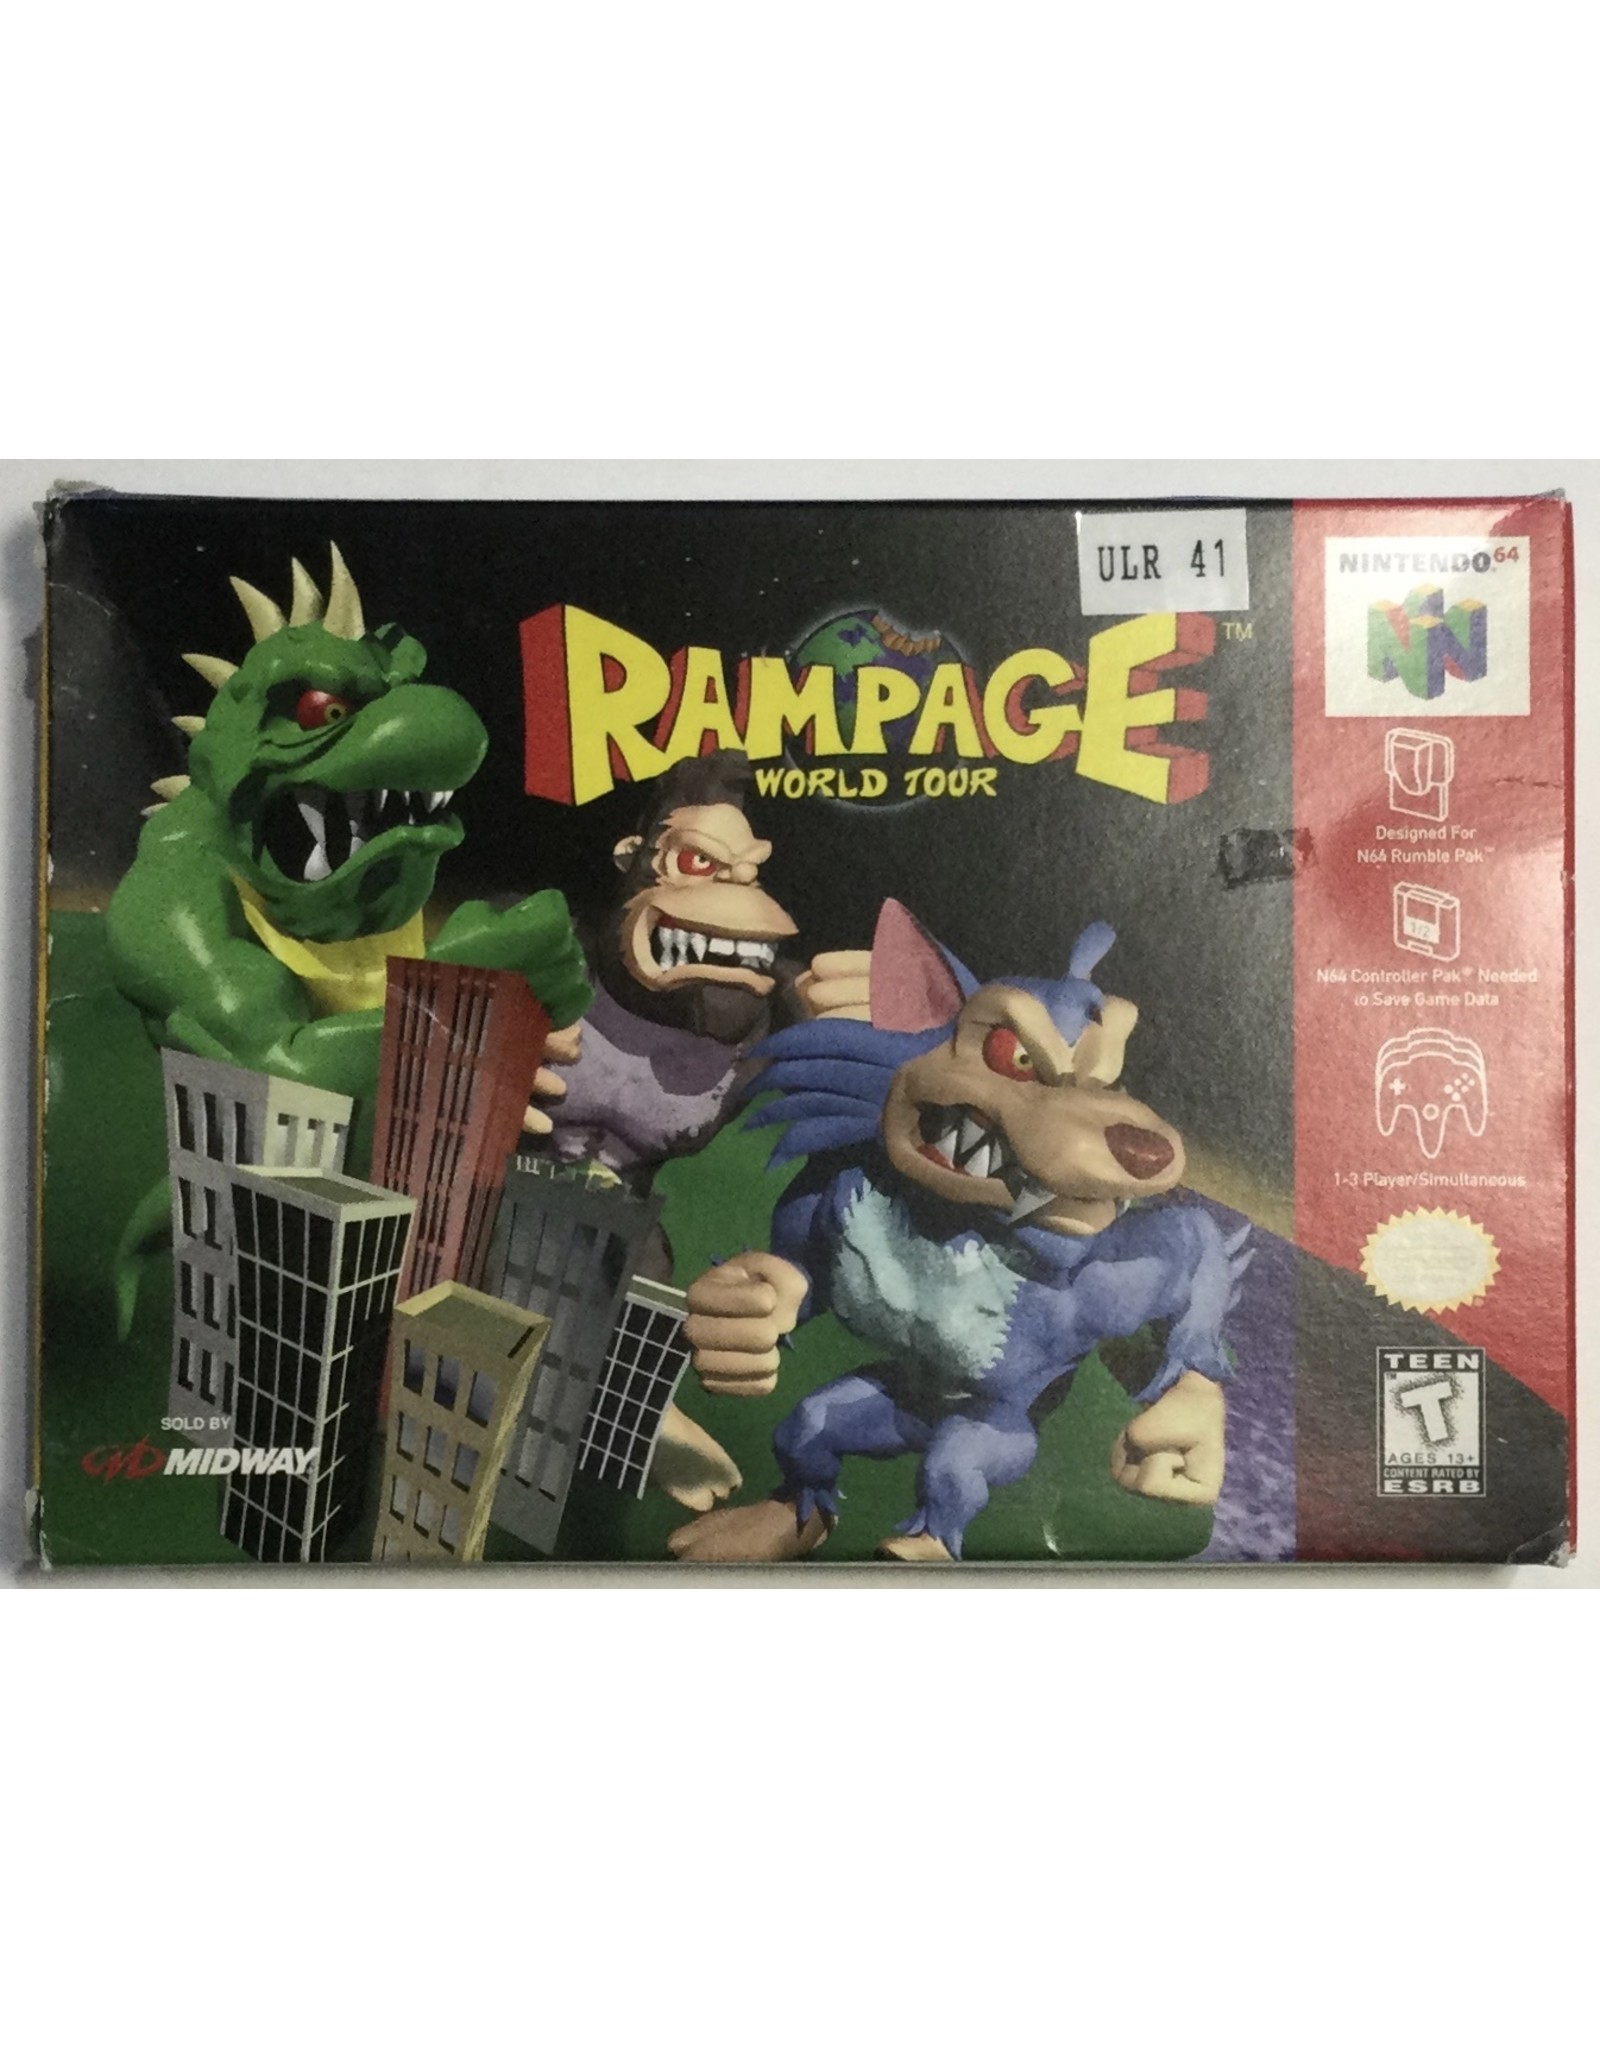 MIDWAY Rampage World Tour for Nintendo 64 (N64) - CIB